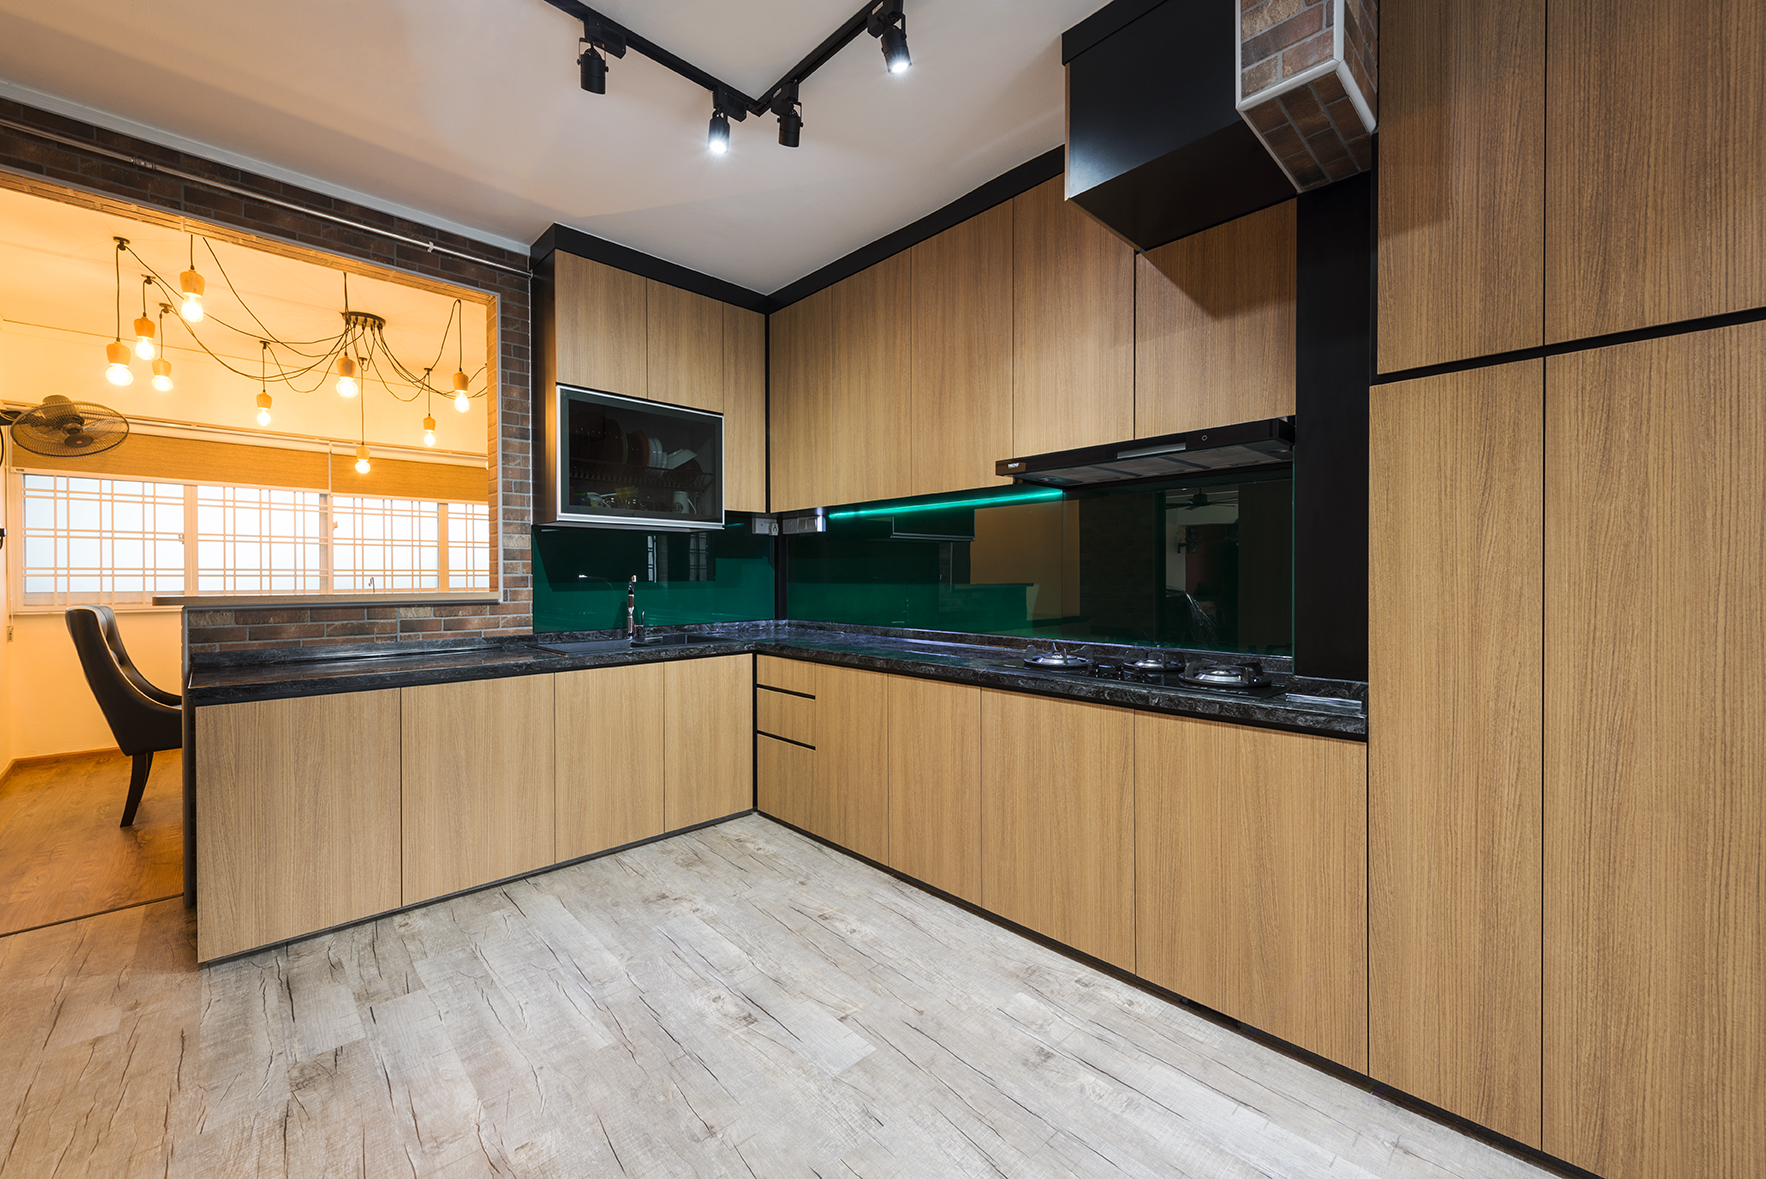 Country, Modern, Scandinavian Design - Kitchen - HDB 5 Room - Design by TBG Interior Design